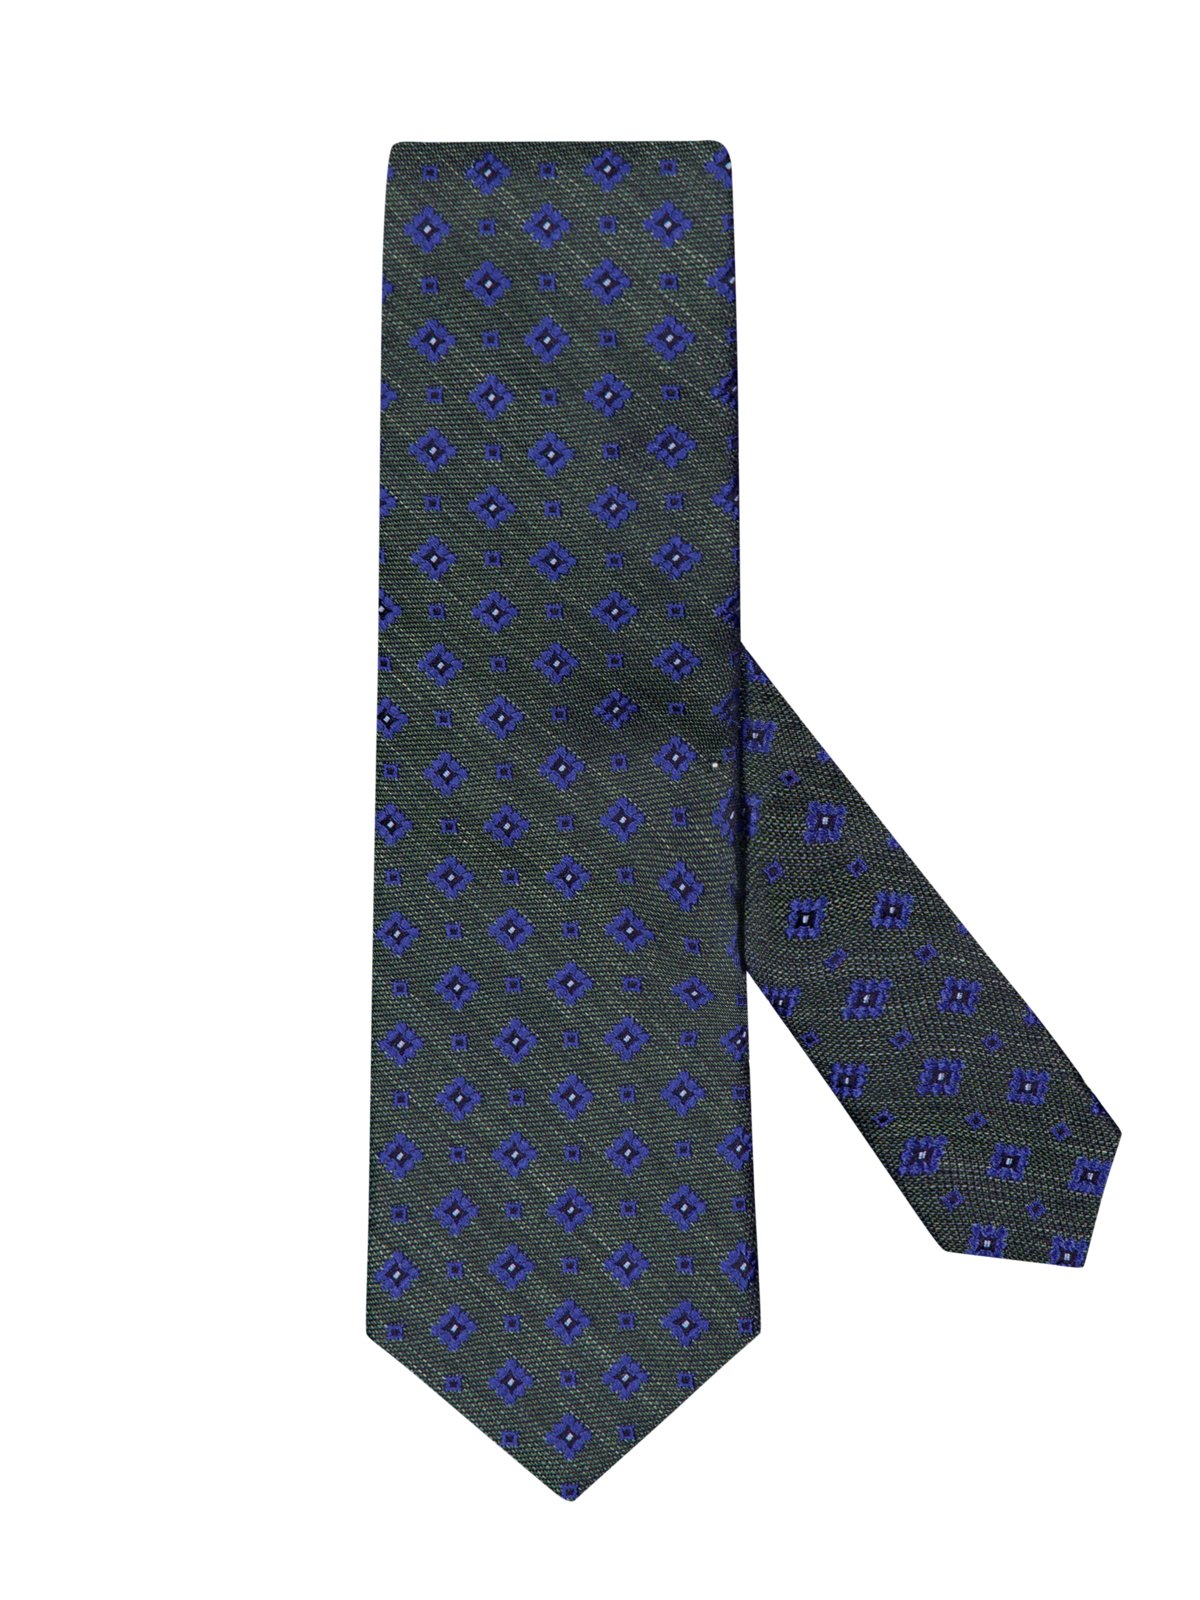 Ascot Krawatte aus Seide mit Muster